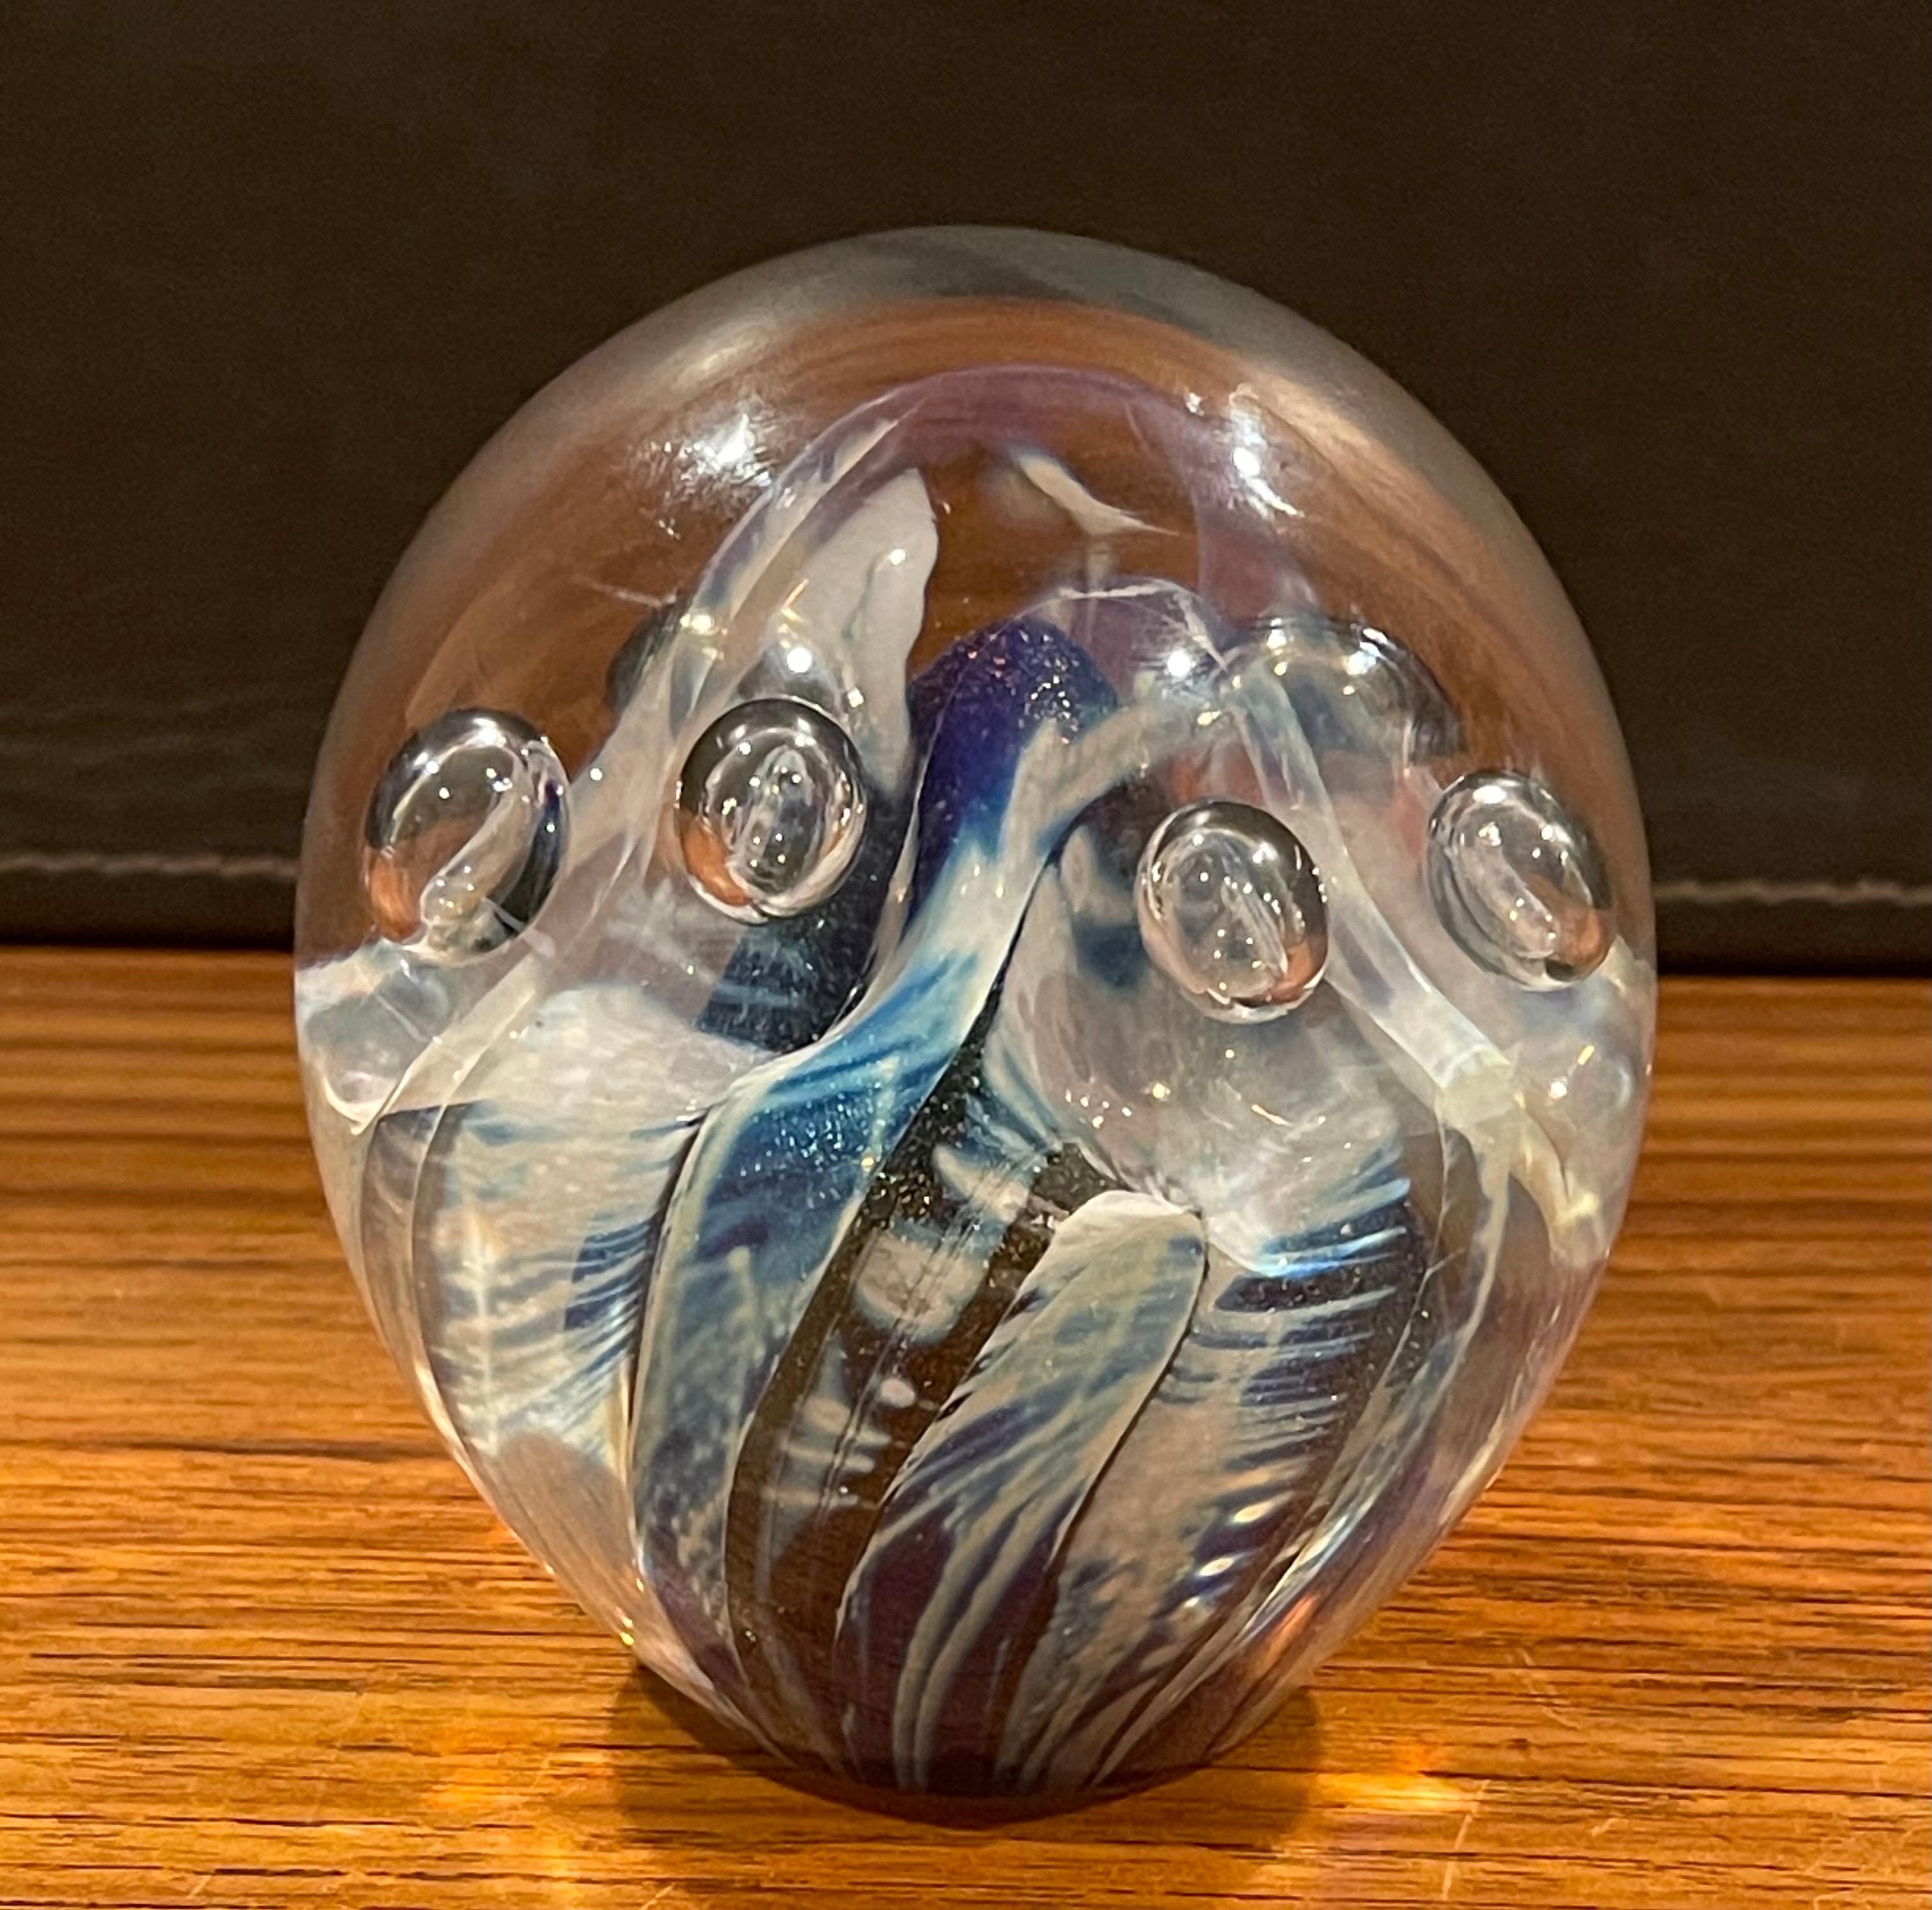 Art Glass Orb Sculpture or Paperweight by Robert Eickholt For Sale 1